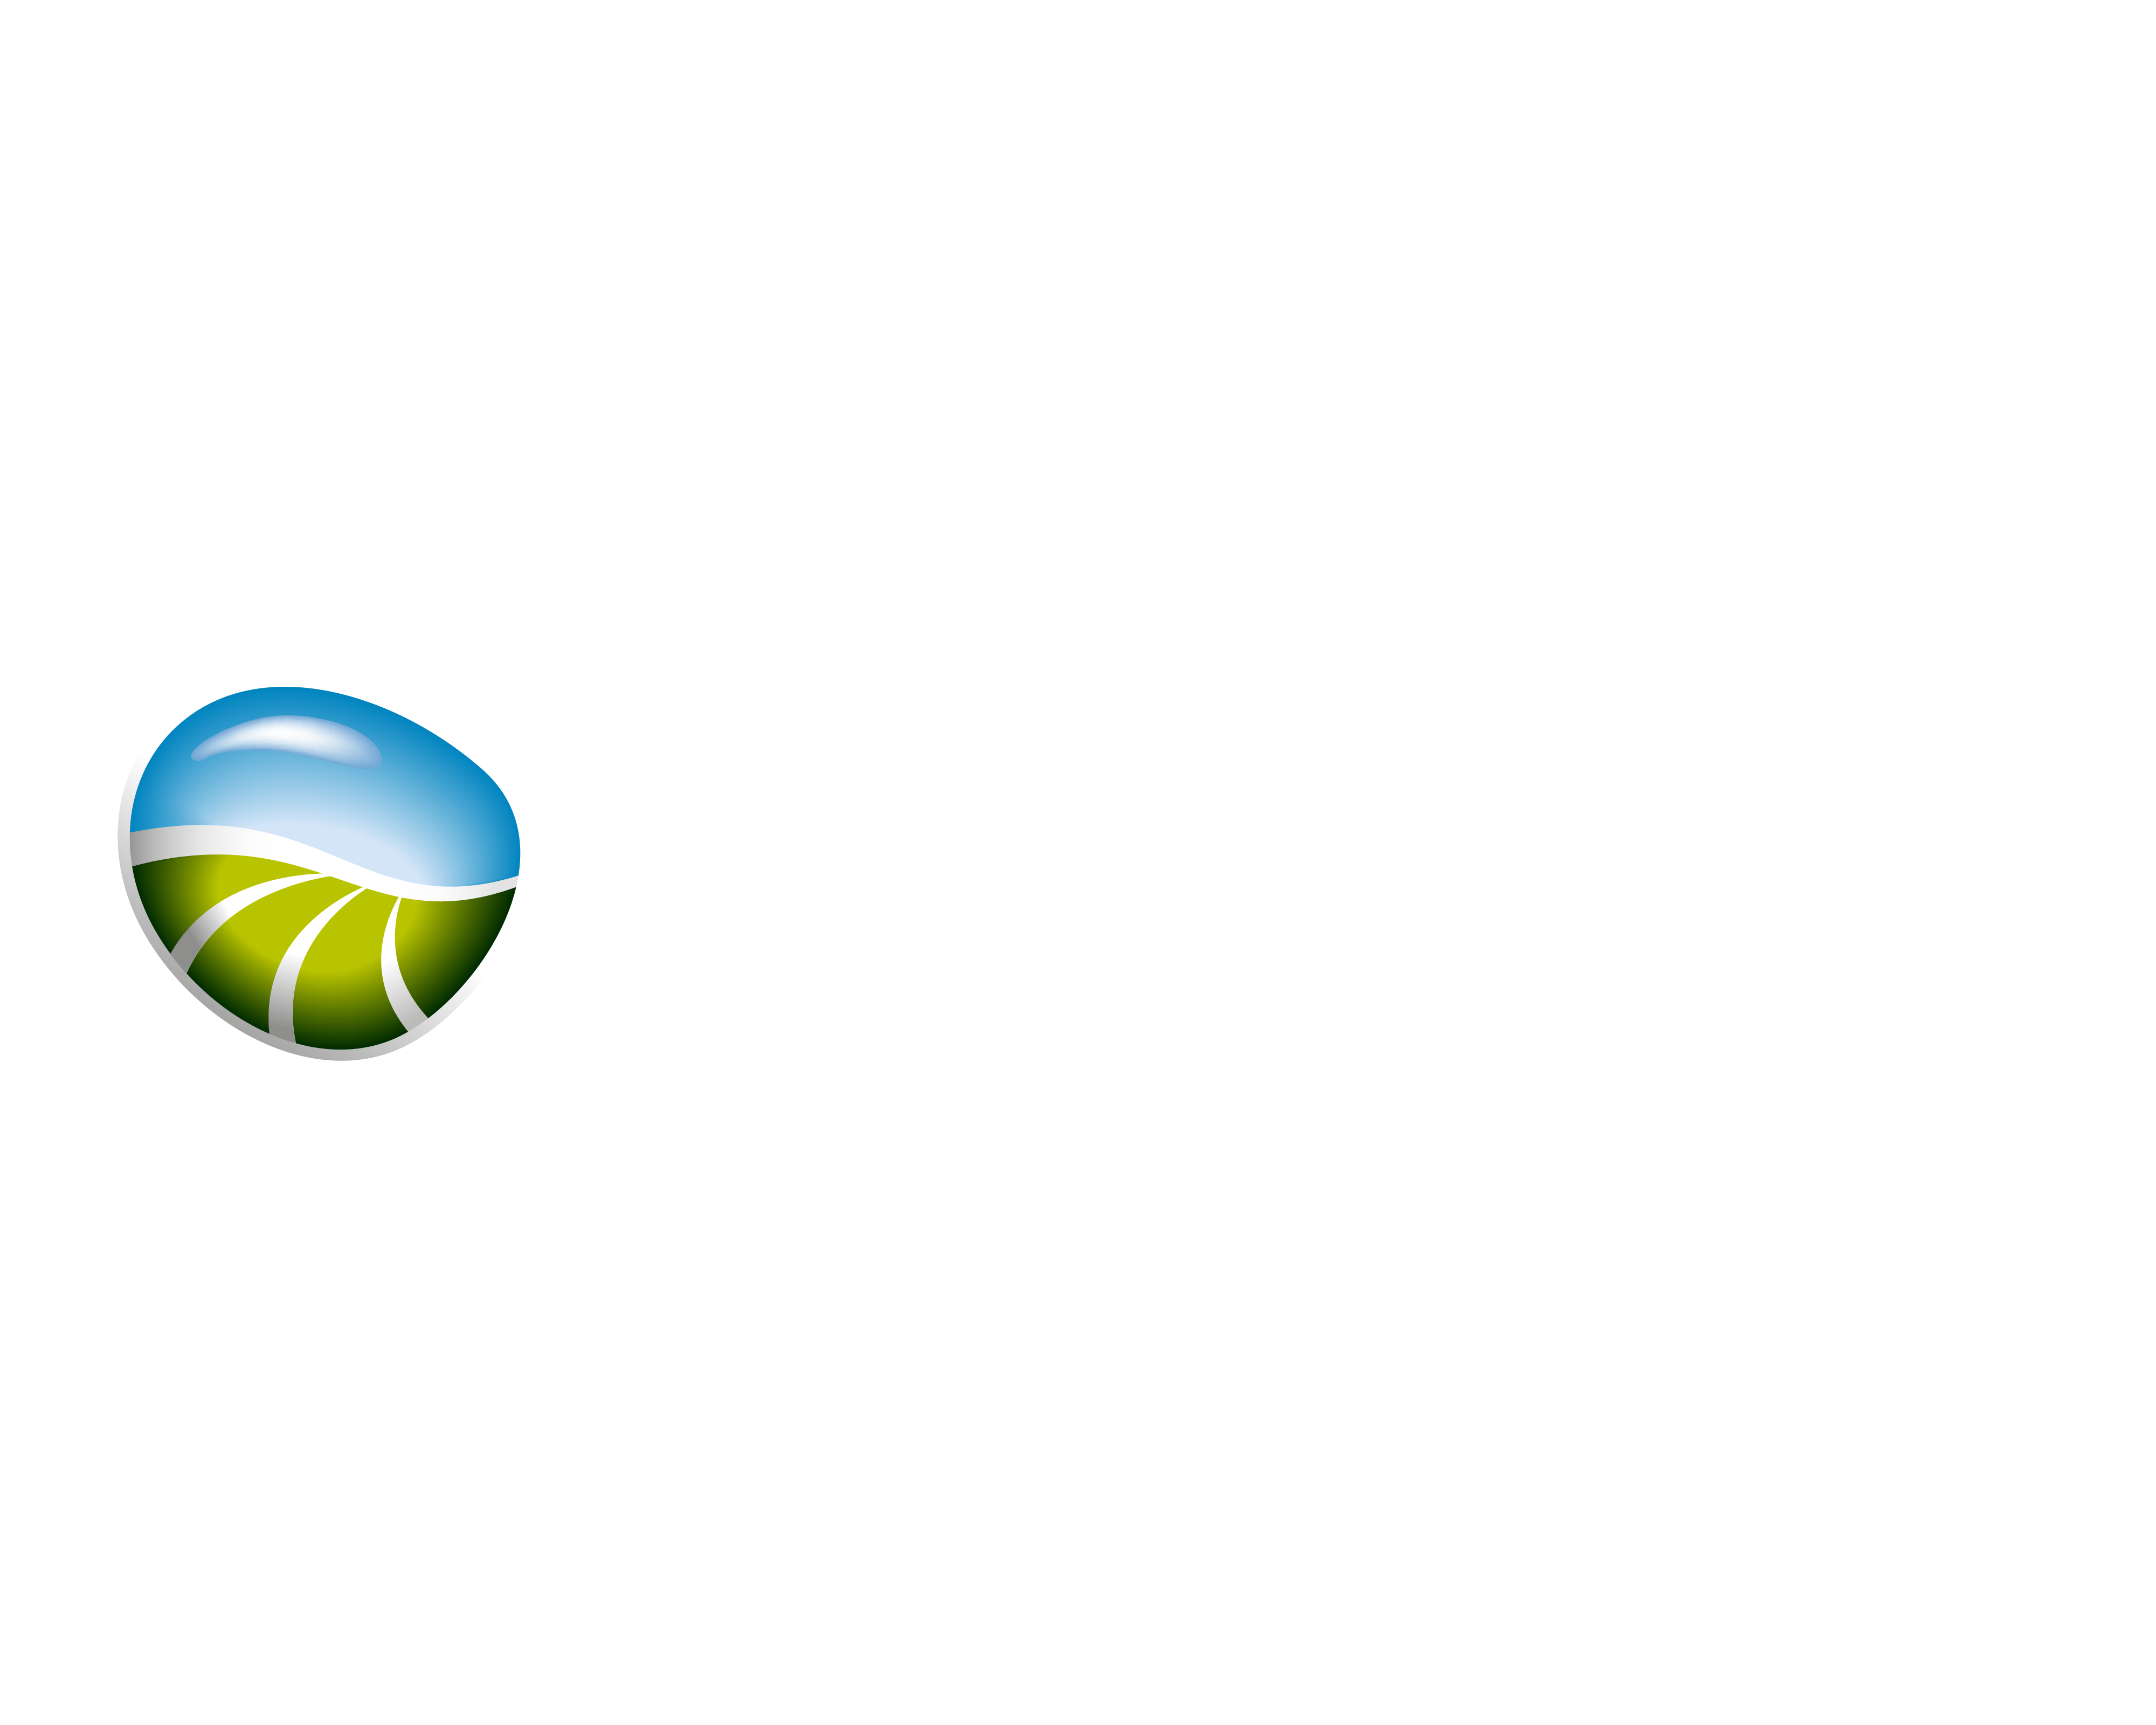 Logo Nortura